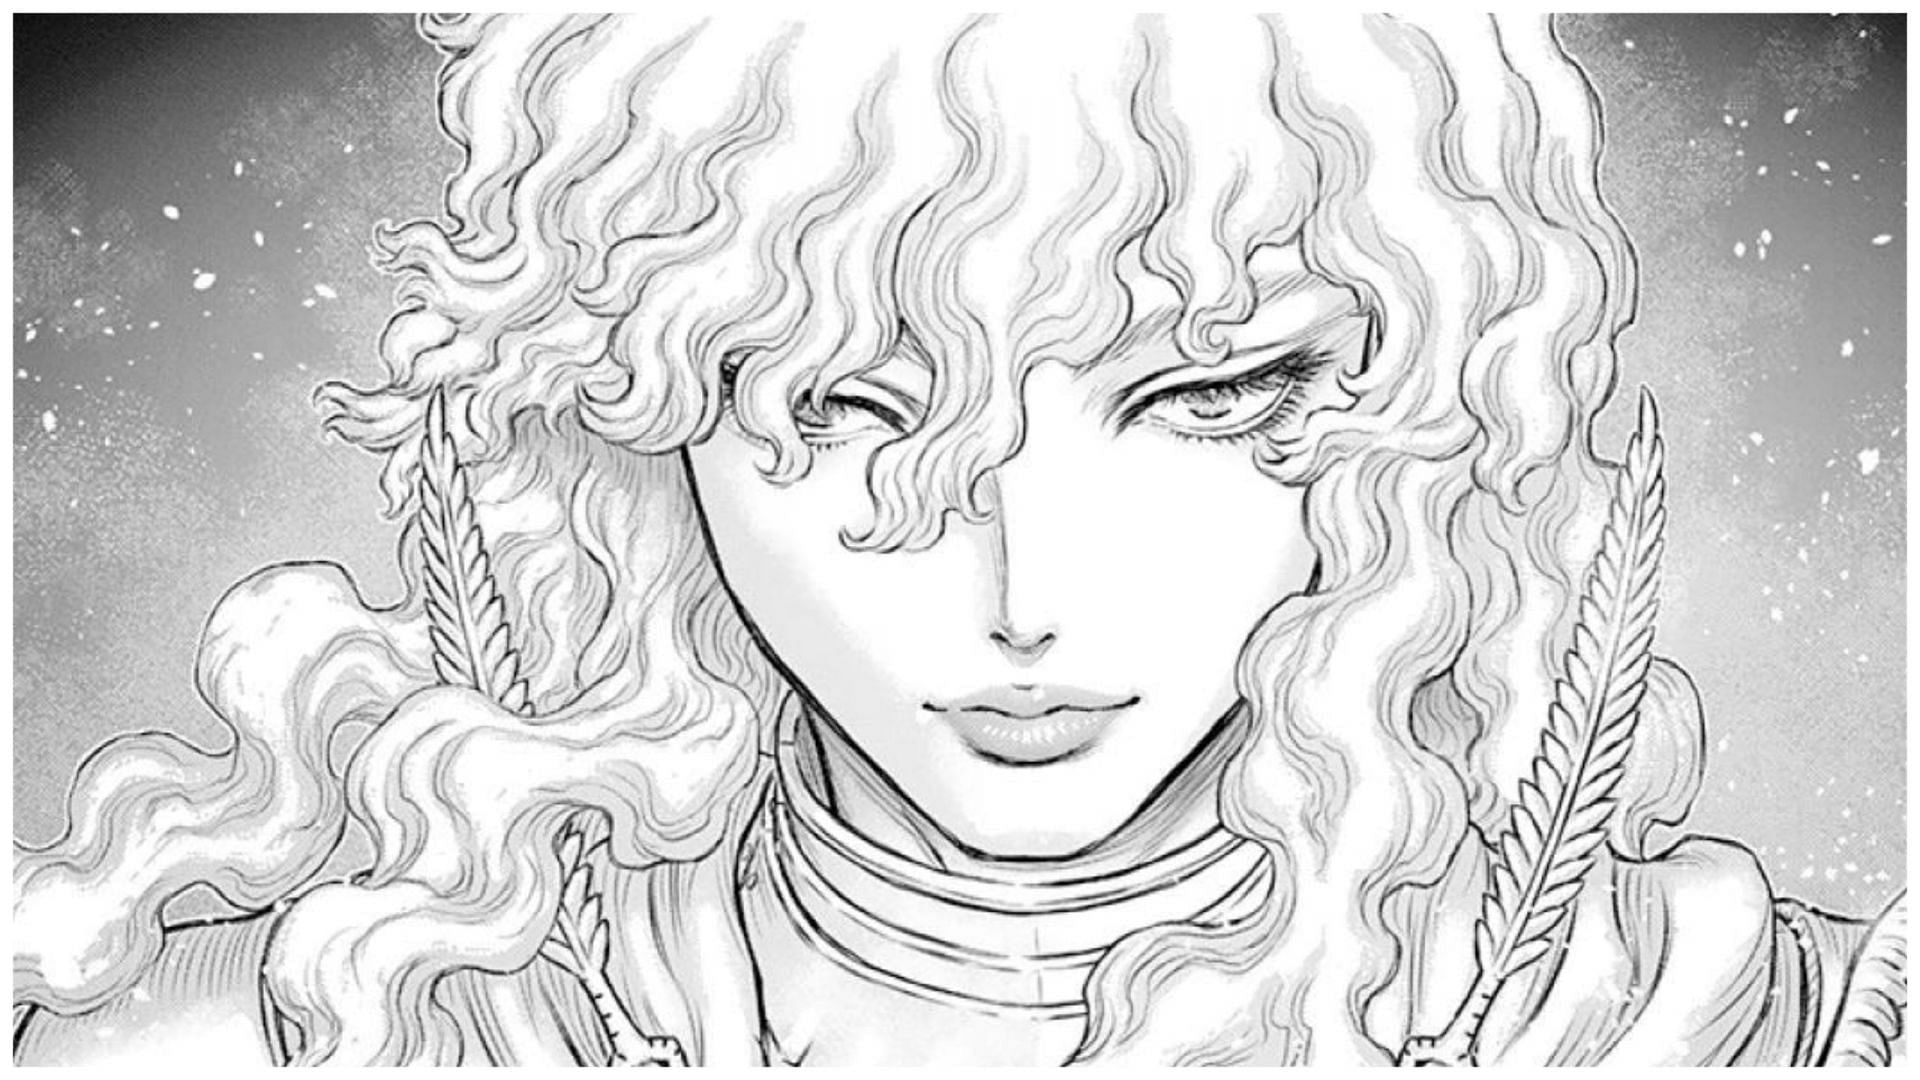 Least lovable shonen anime character - Griffith from the Berserk series (Image via Studio Pierrot)